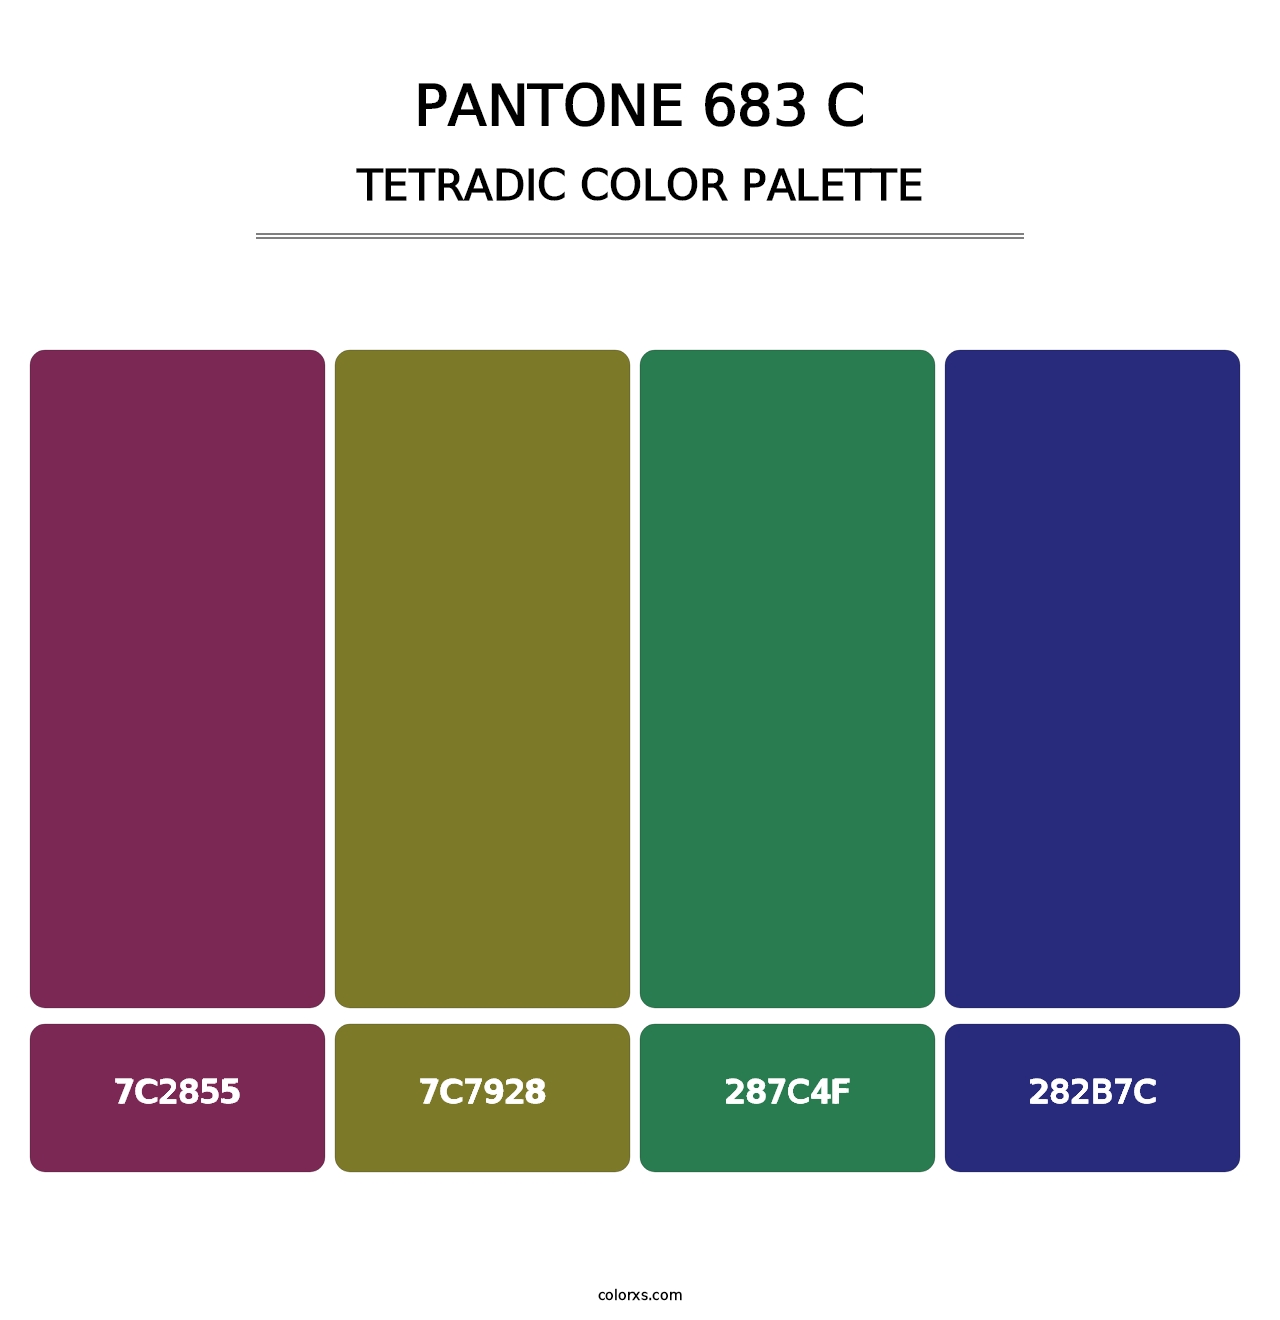 PANTONE 683 C - Tetradic Color Palette